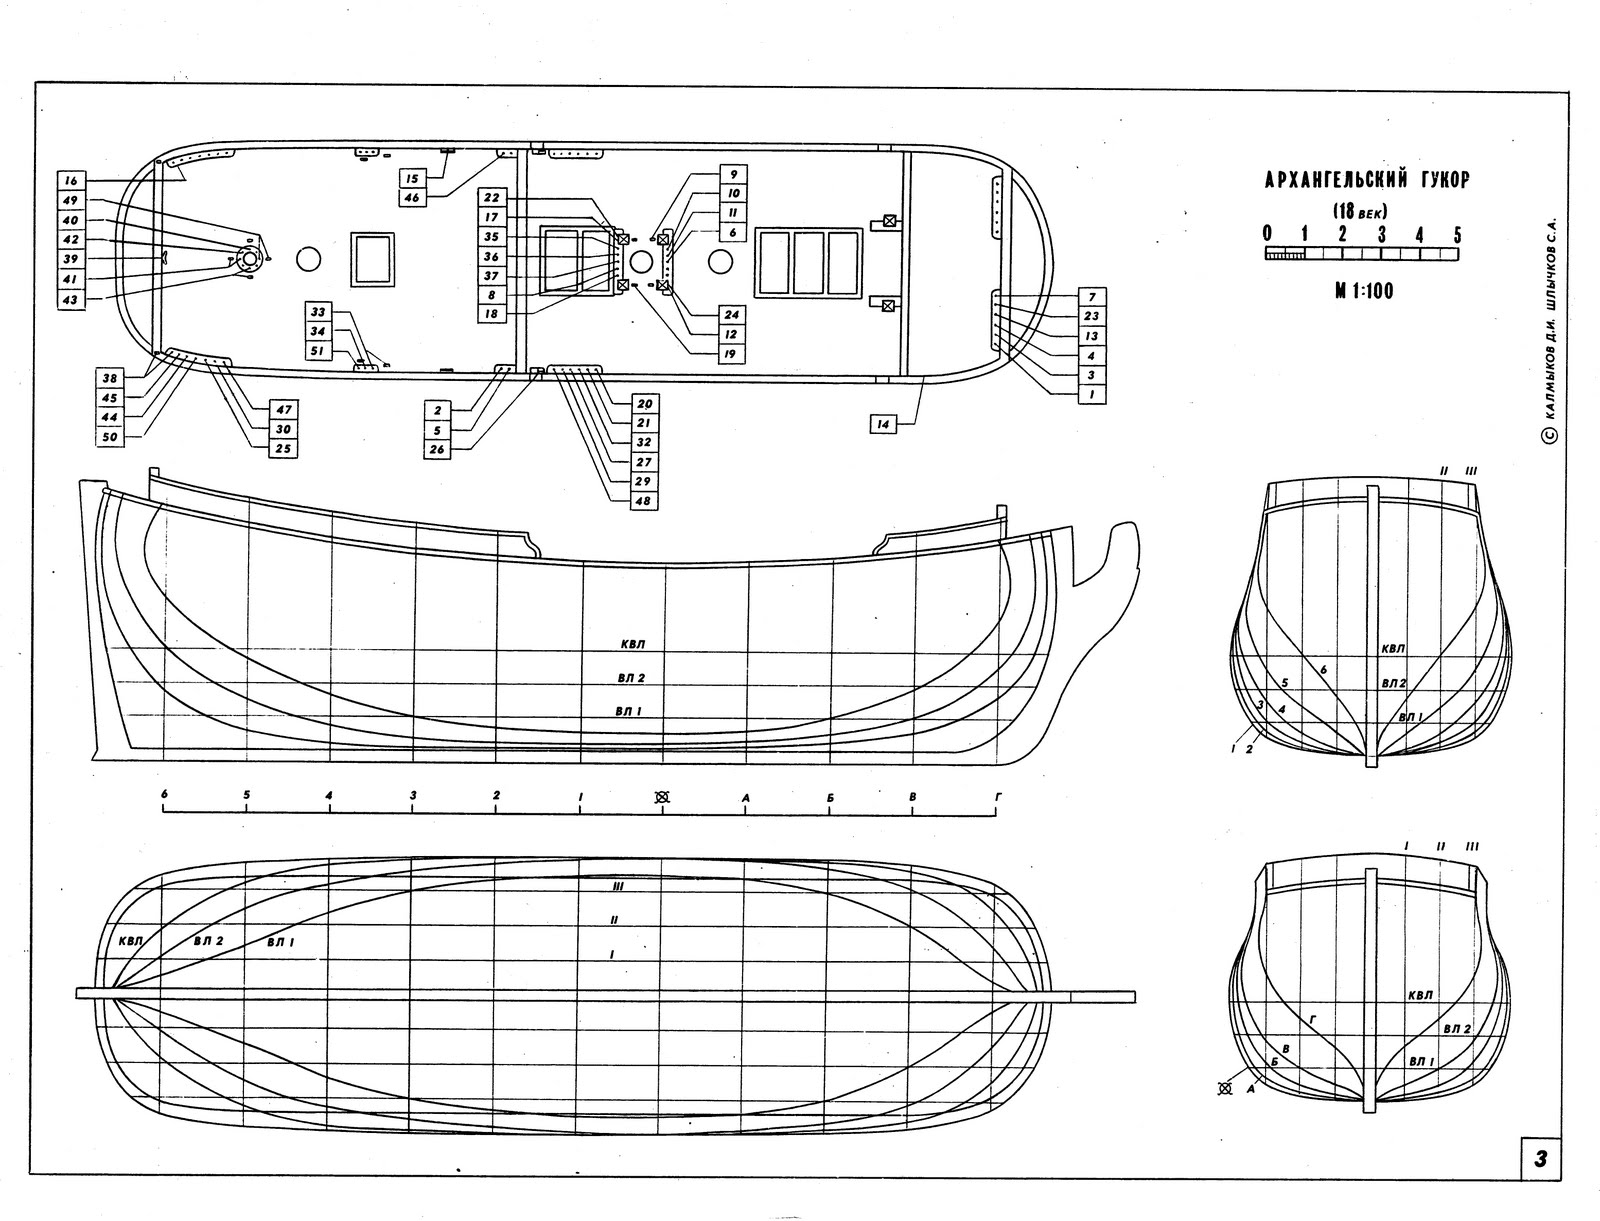 free wooden model boat designs | DIY Woodworking Plans